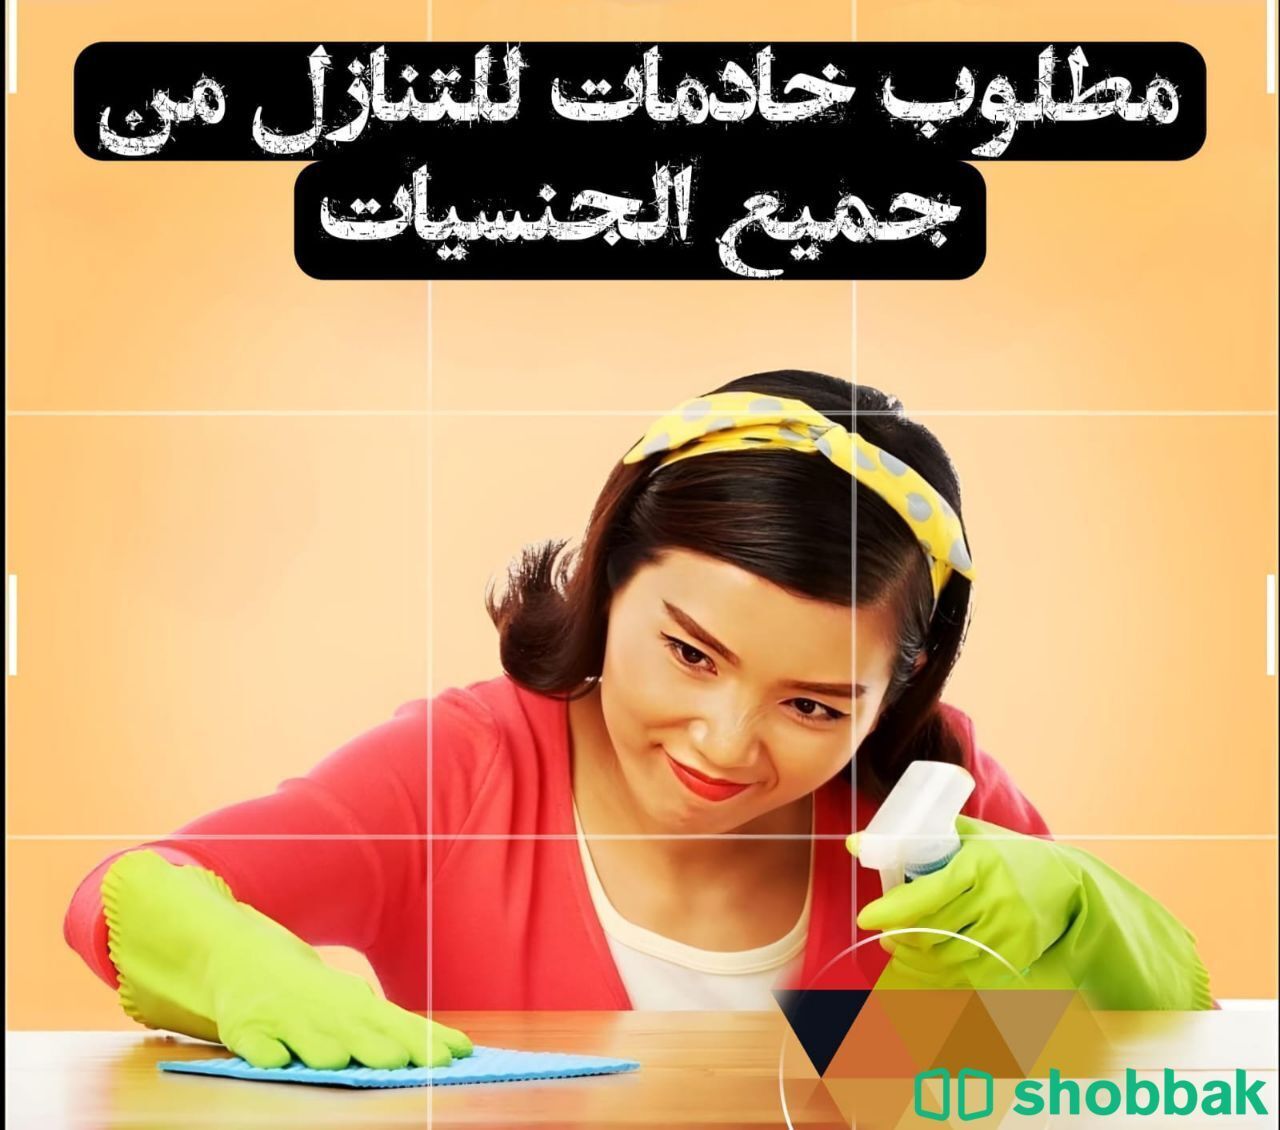 عاملات للتنازل  Shobbak Saudi Arabia